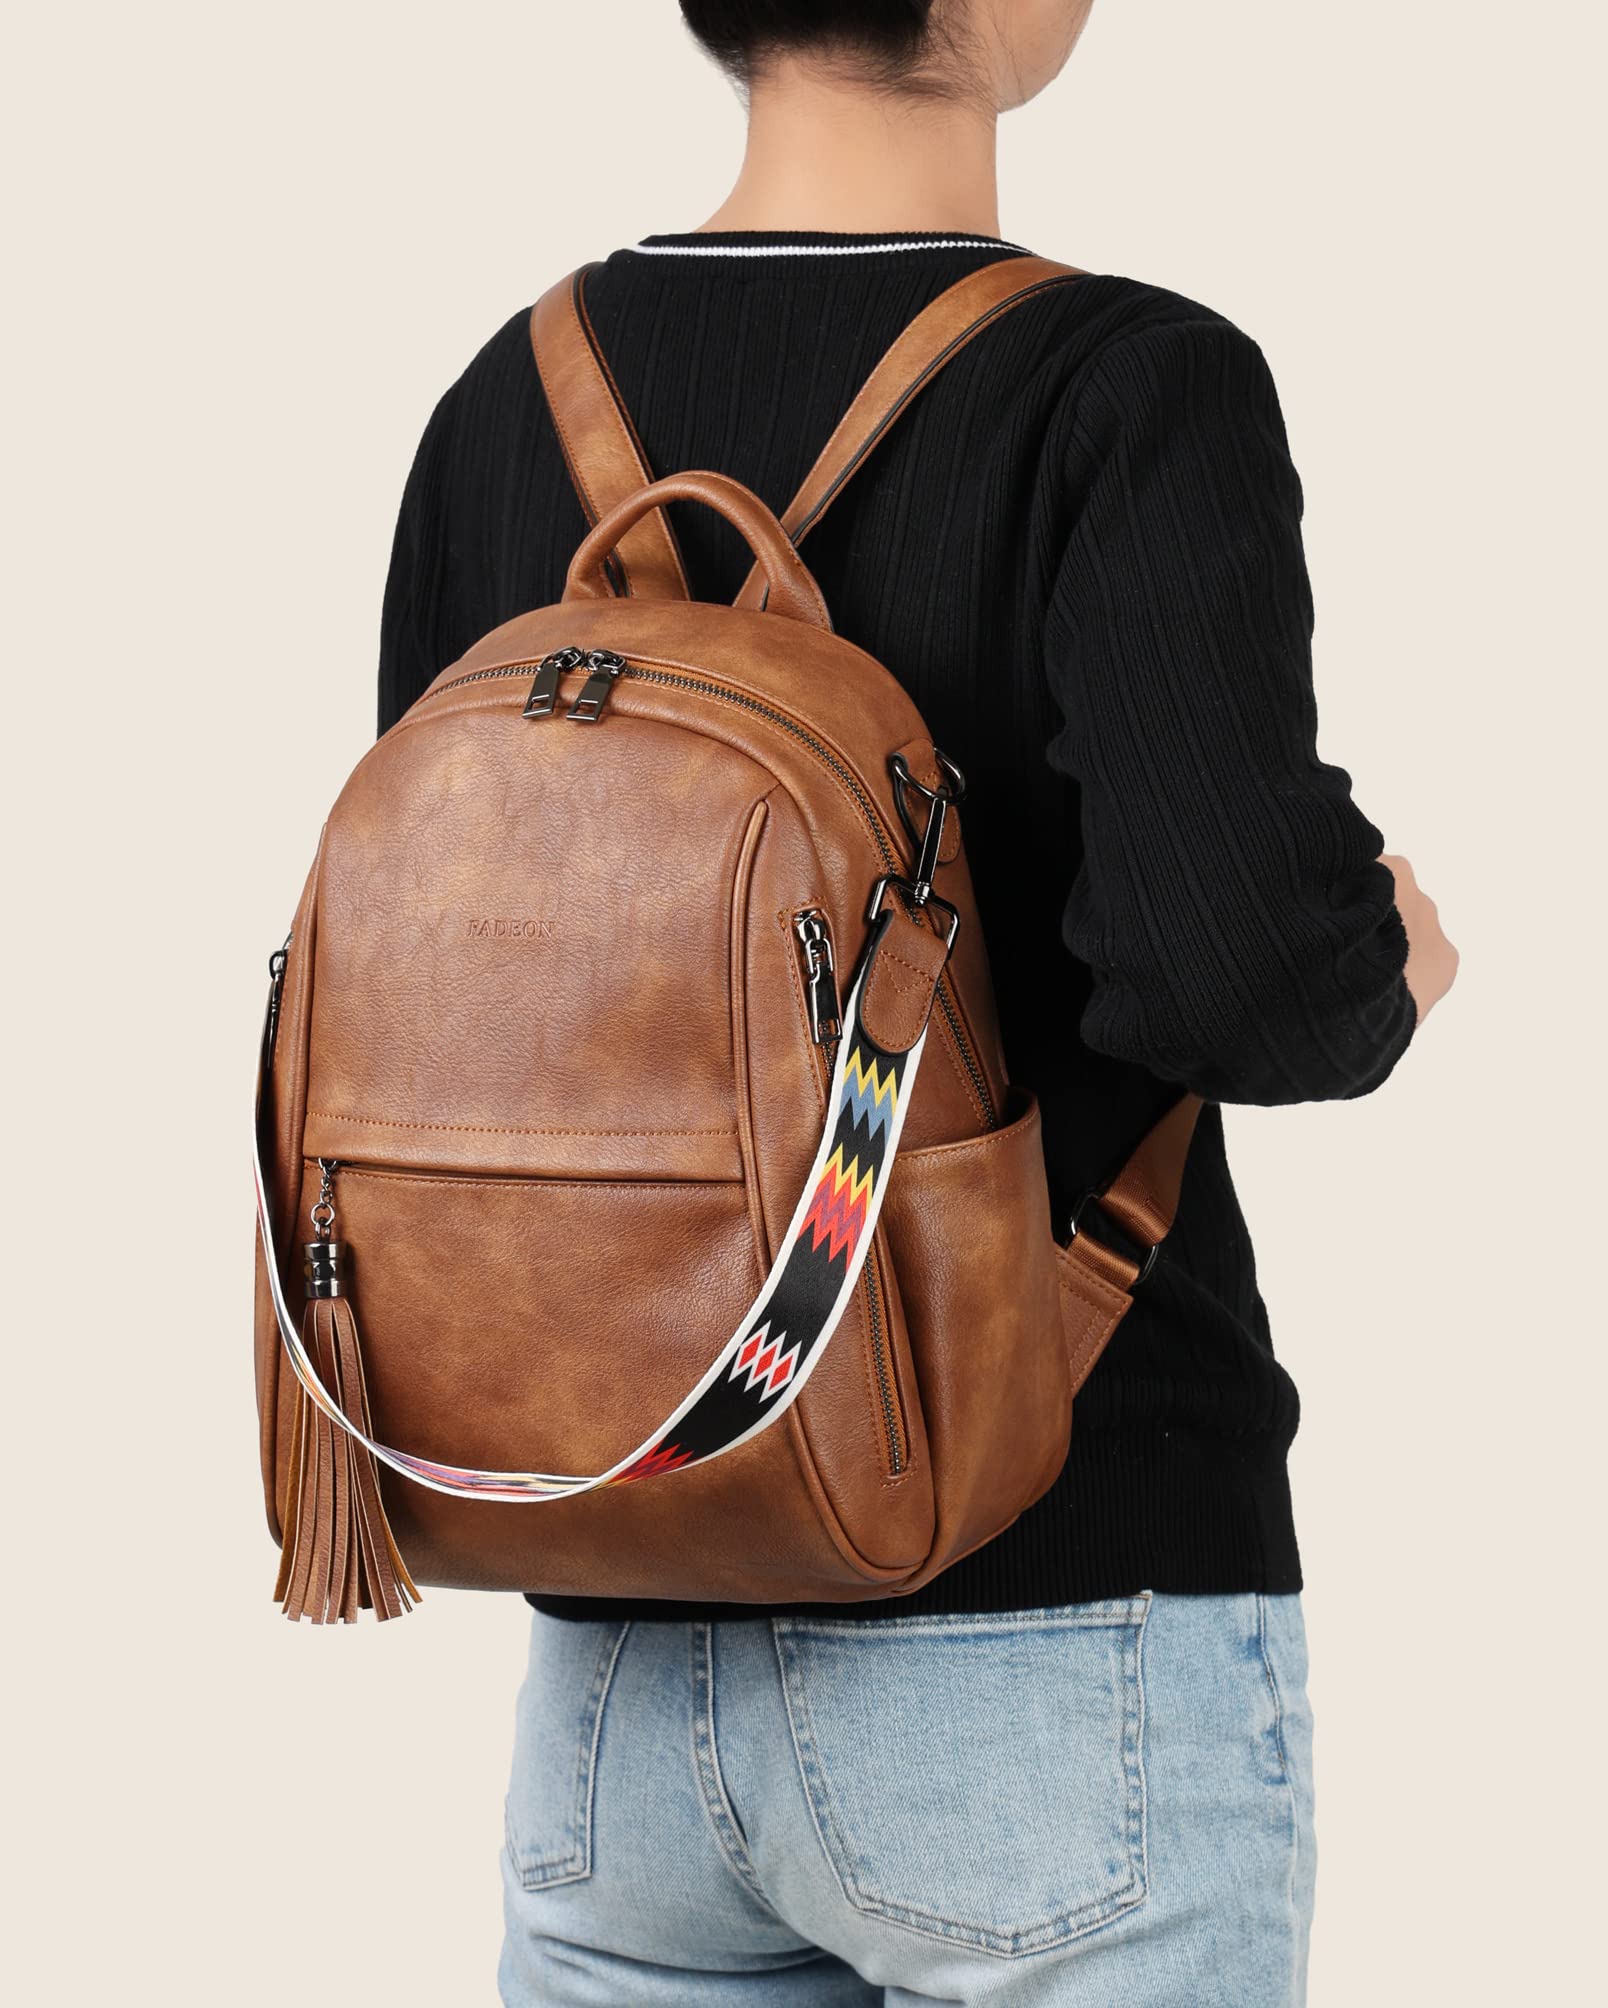 FADEON Backpack Purse for Women, Leather Handbags Designer Cute Roomy Ladies Shoulder Bag with Tassel